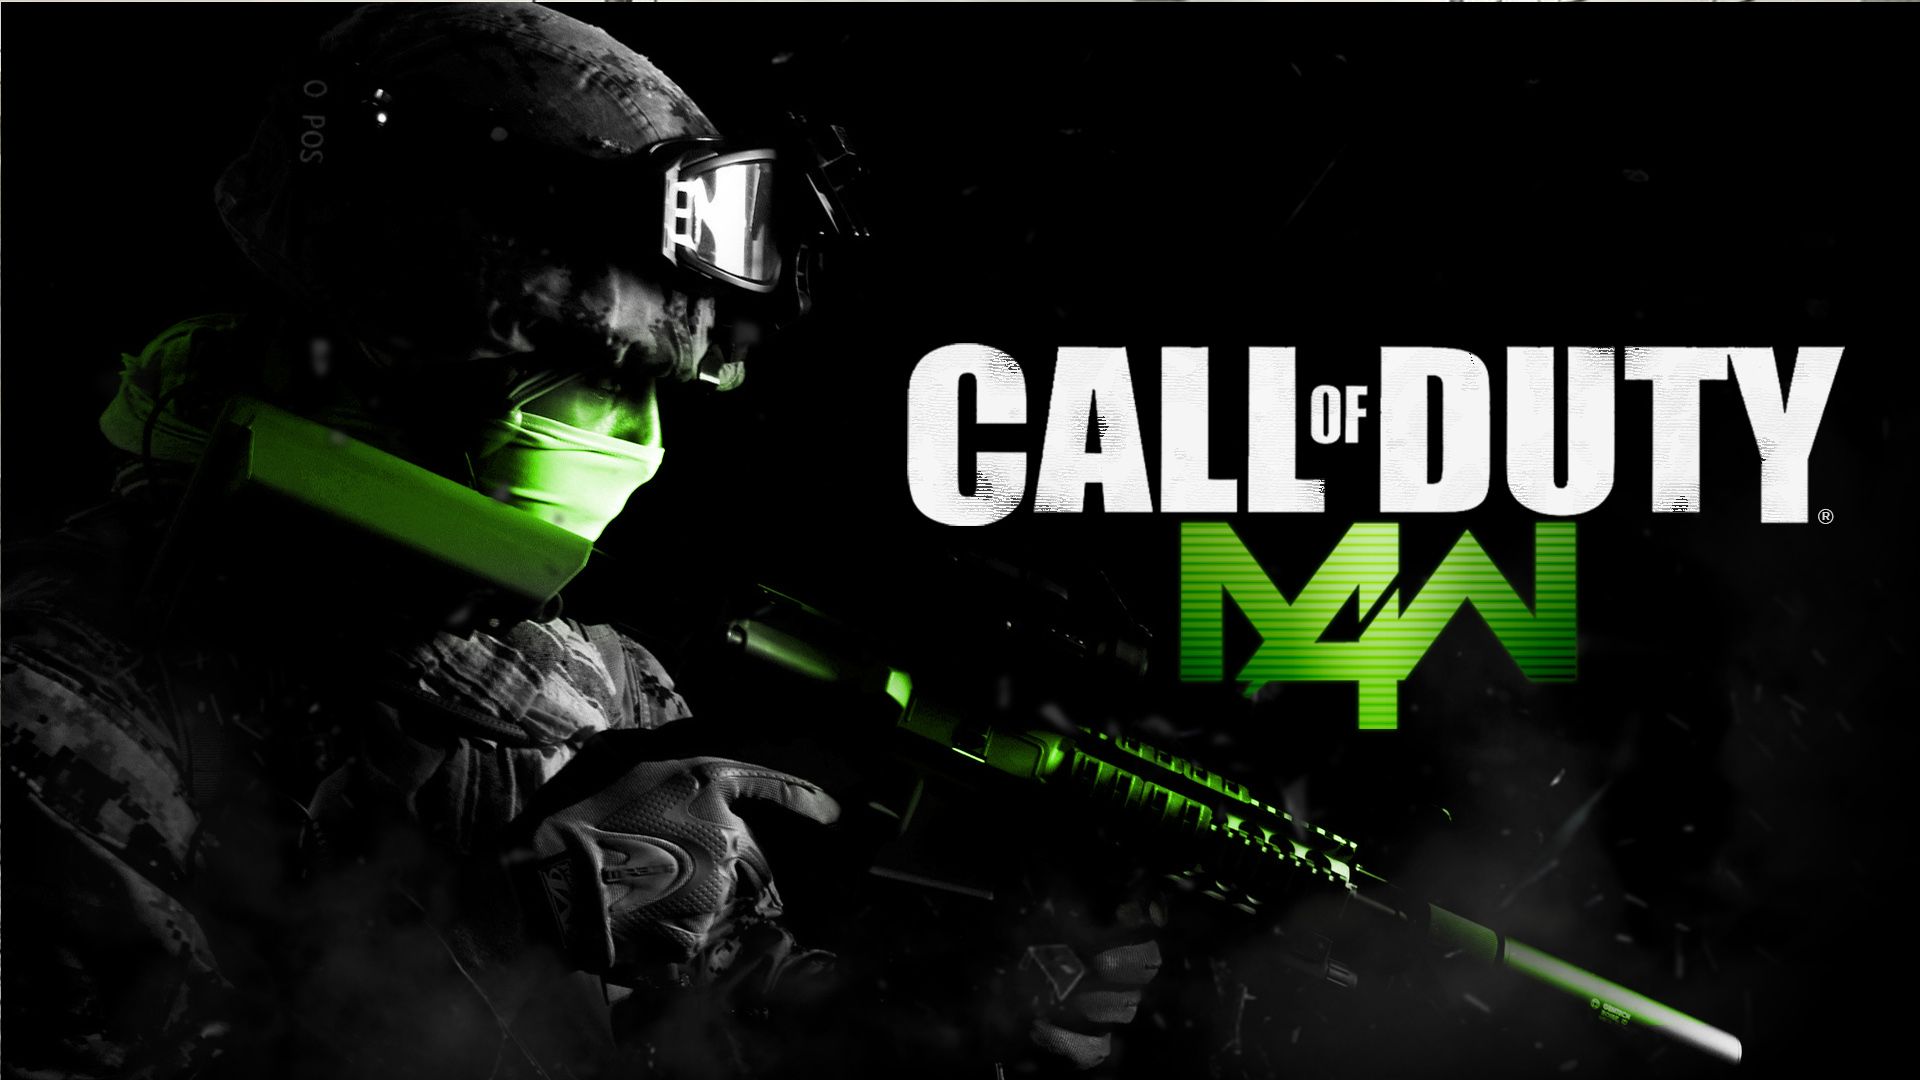 Call Of Duty 4: Modern Warfare Wallpaper, Picture, Image